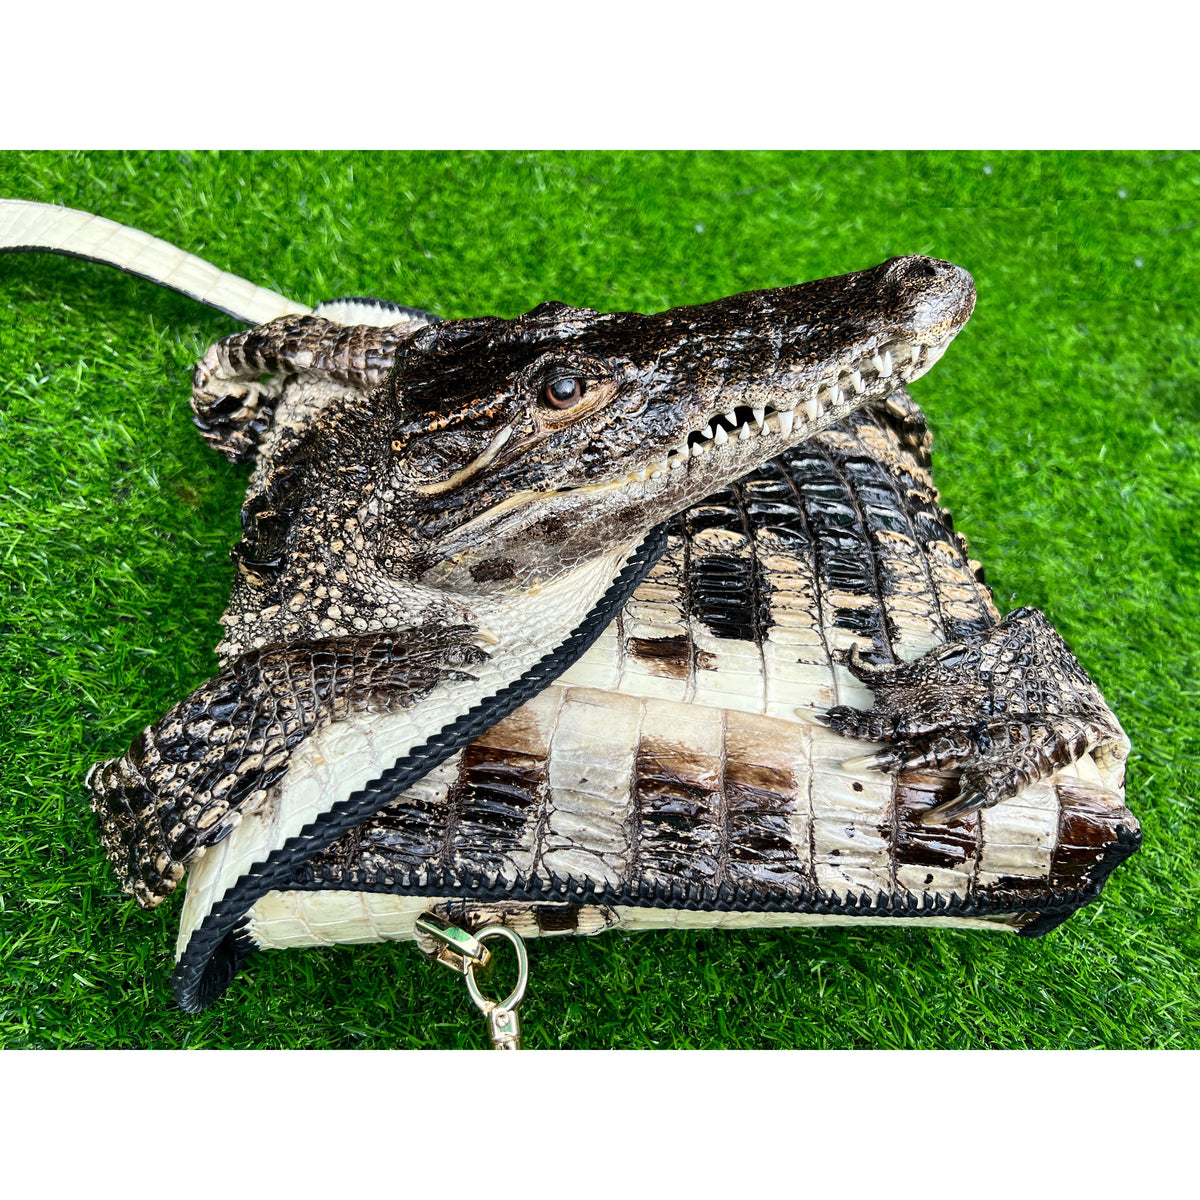 Black Alligator Leather Backpack Rucksack Women, Small Unique Bag Chri –  Vinacreations